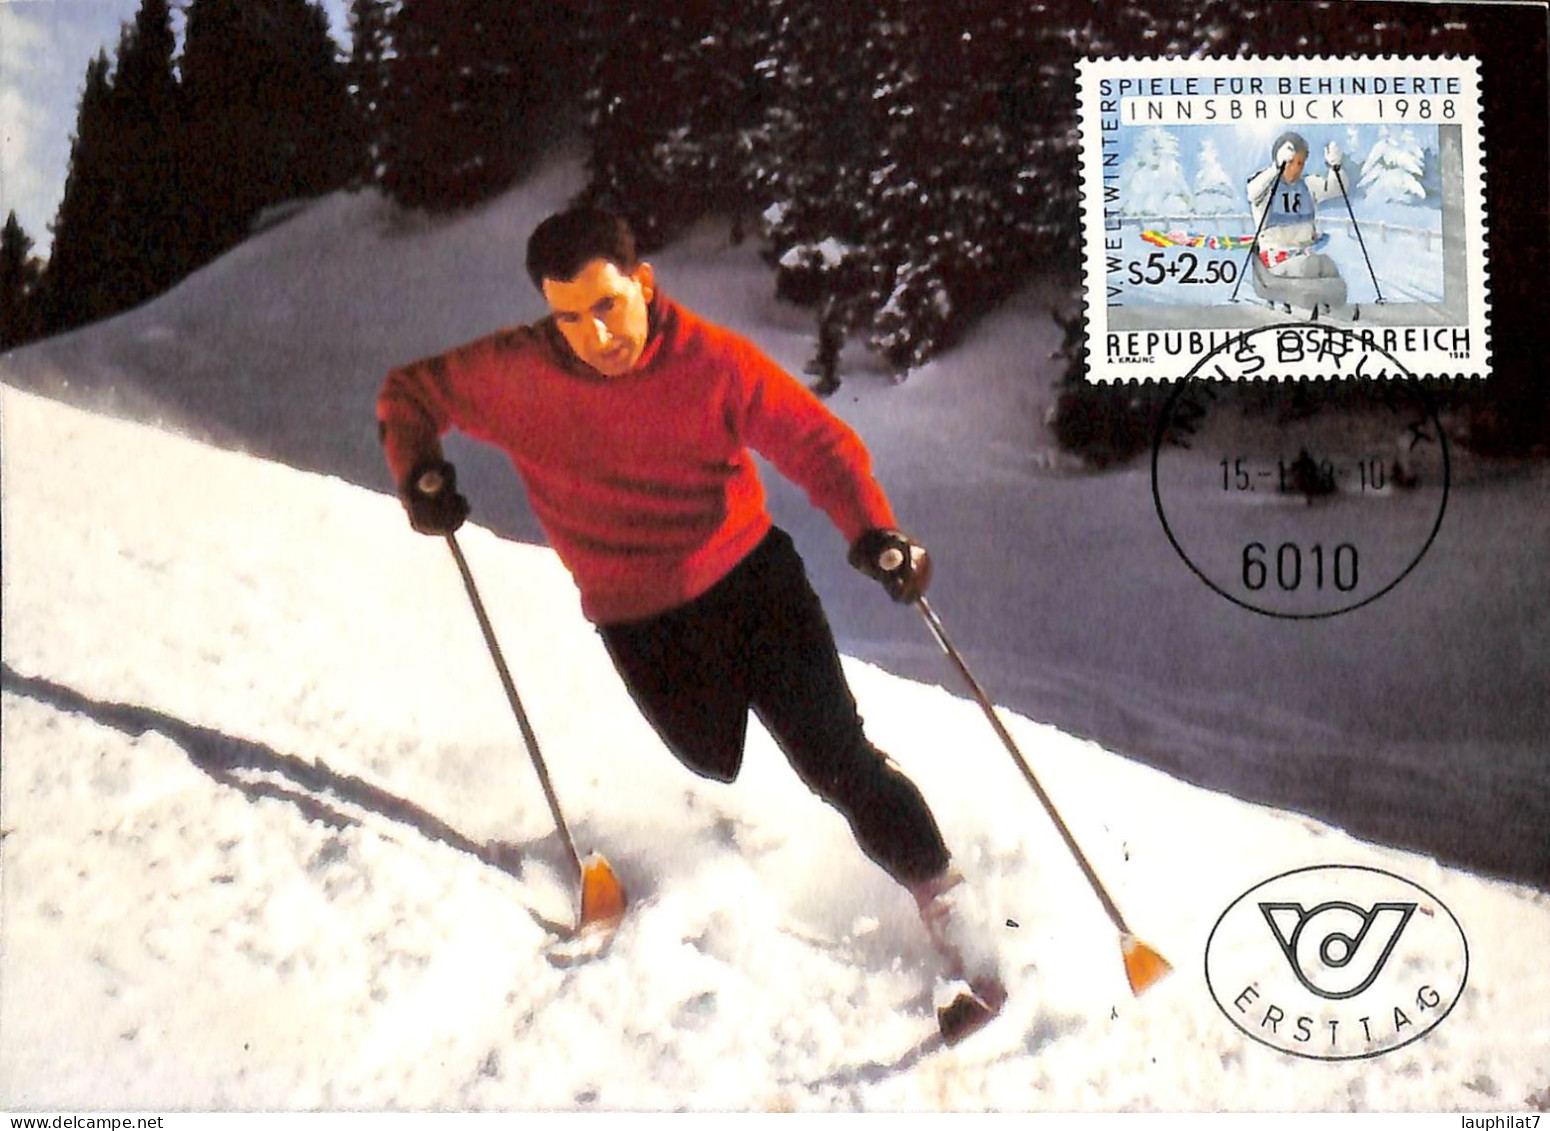 [500013]B/TB//-Autriche 1988 - 6010 INNSBRUCK, Sports, Ski - Maximum Cards